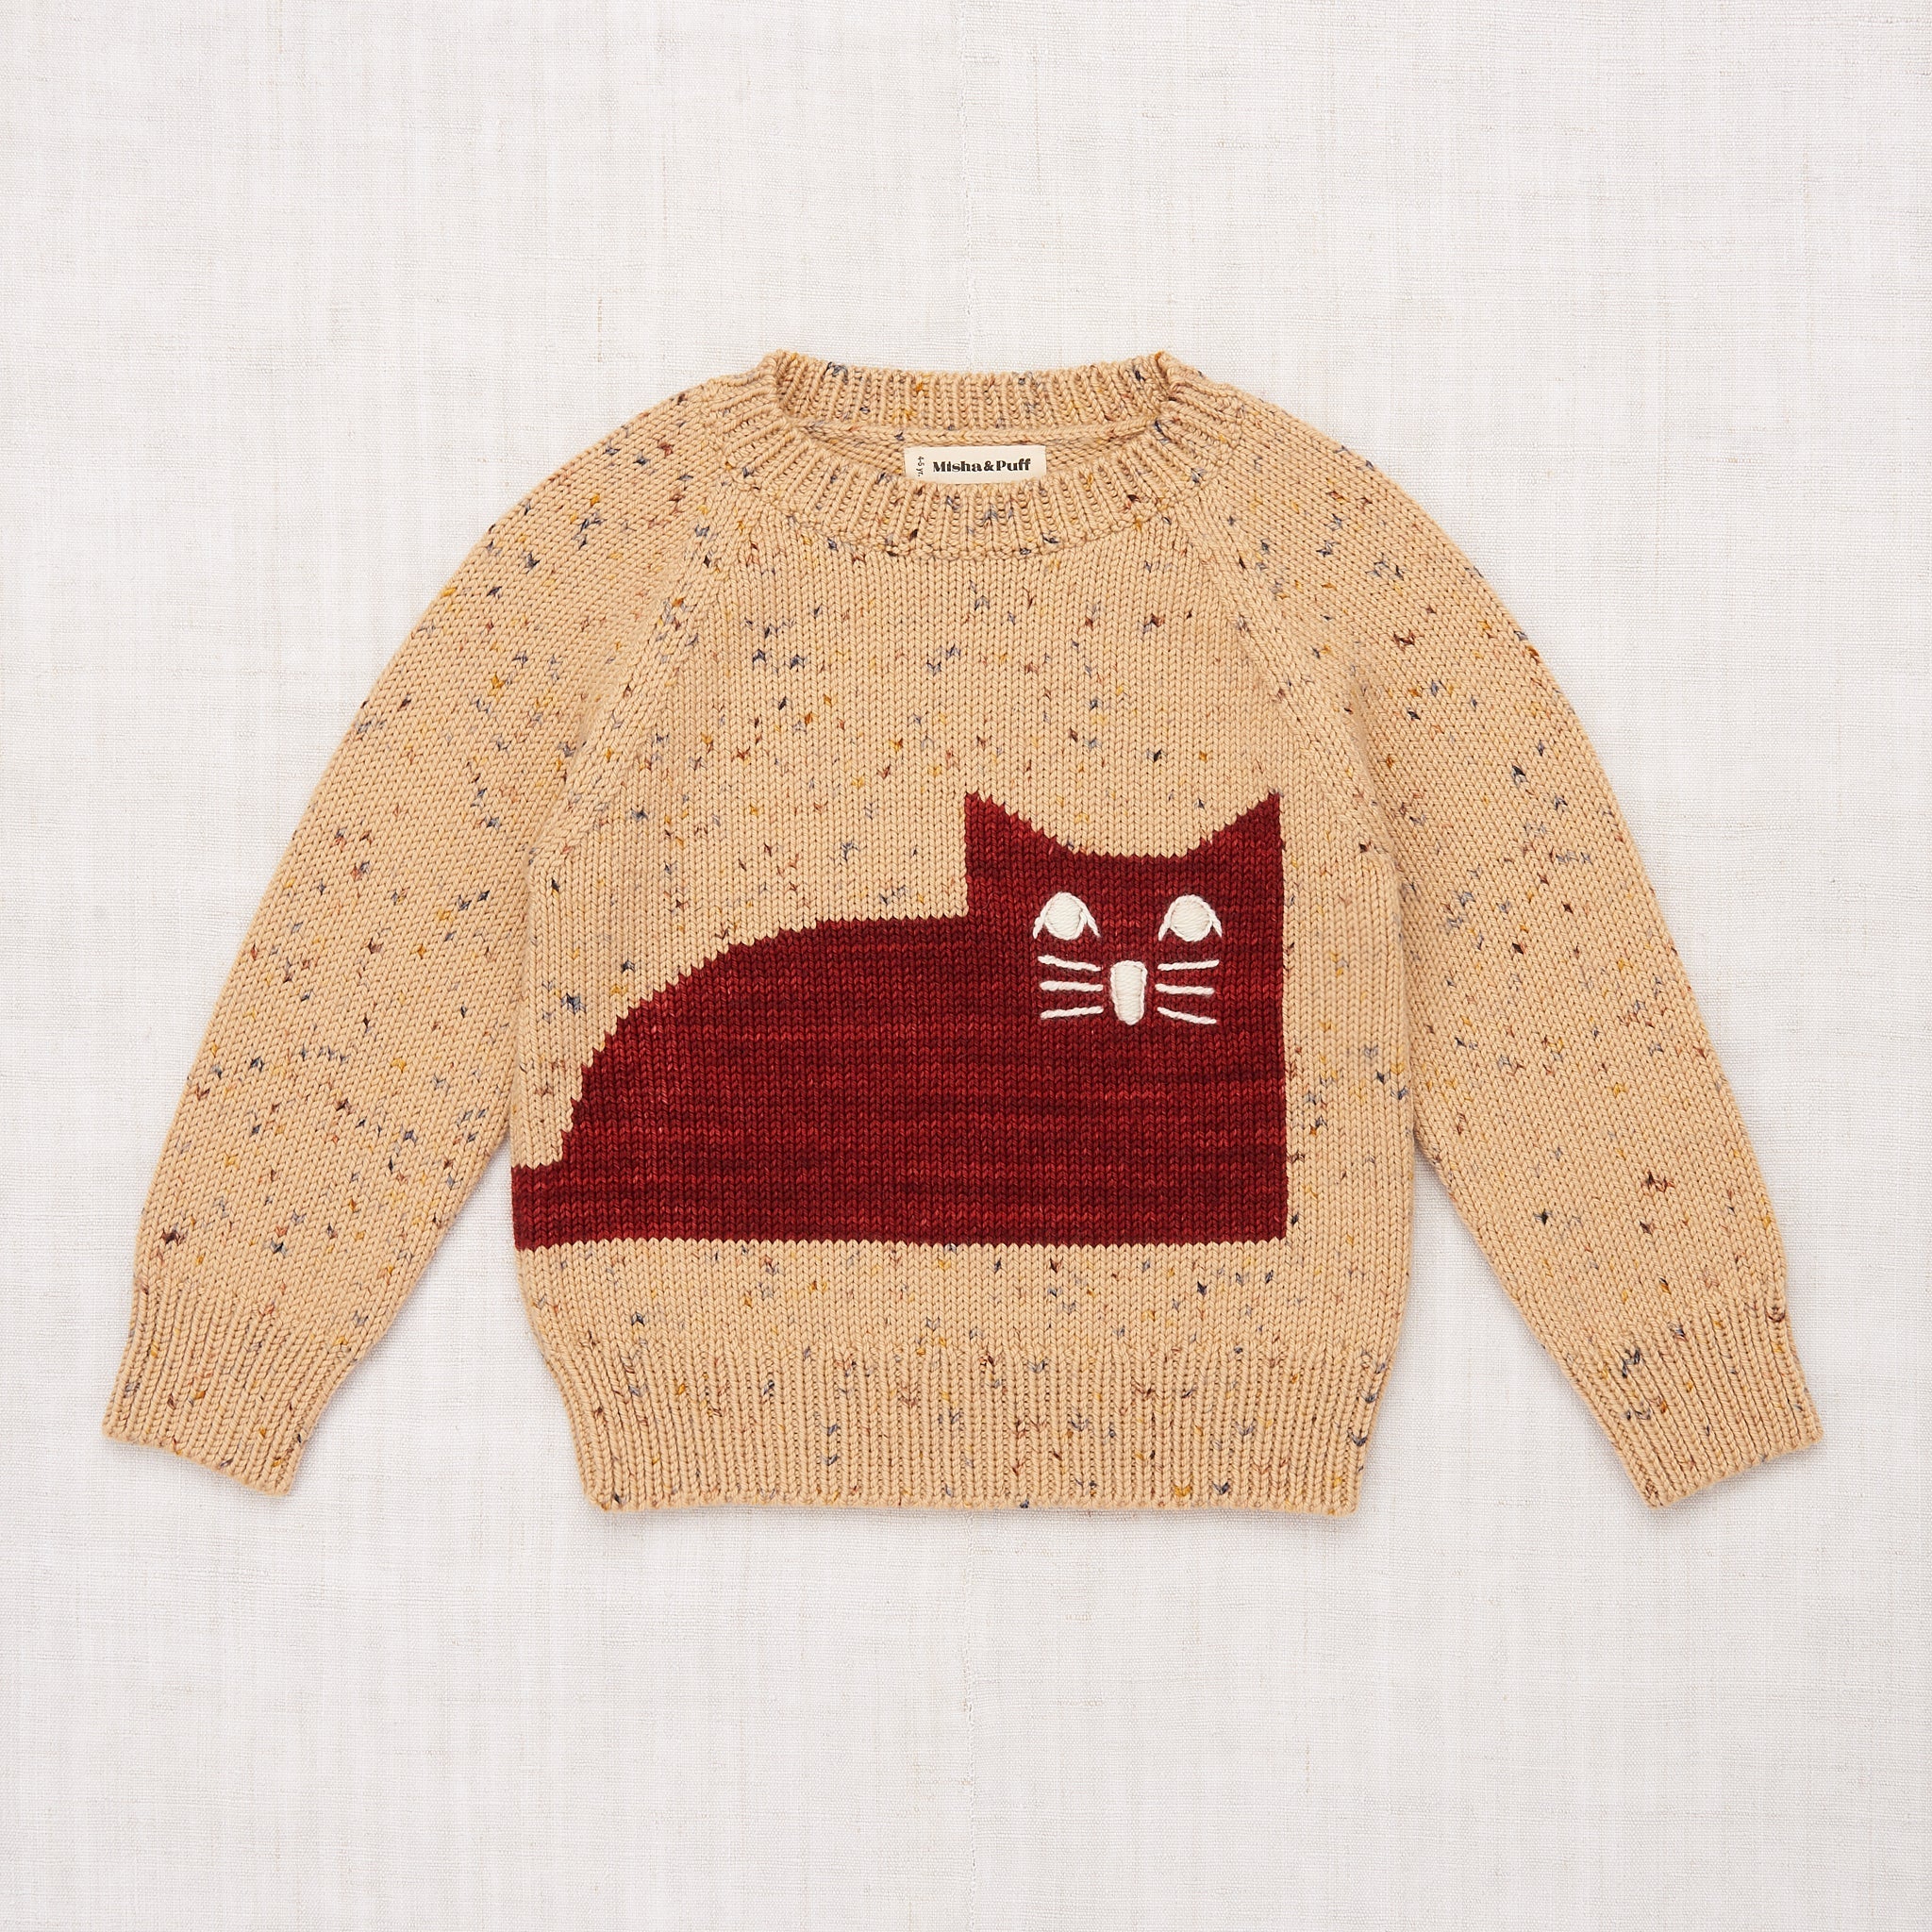 mishaandpuff cat sweater 4y